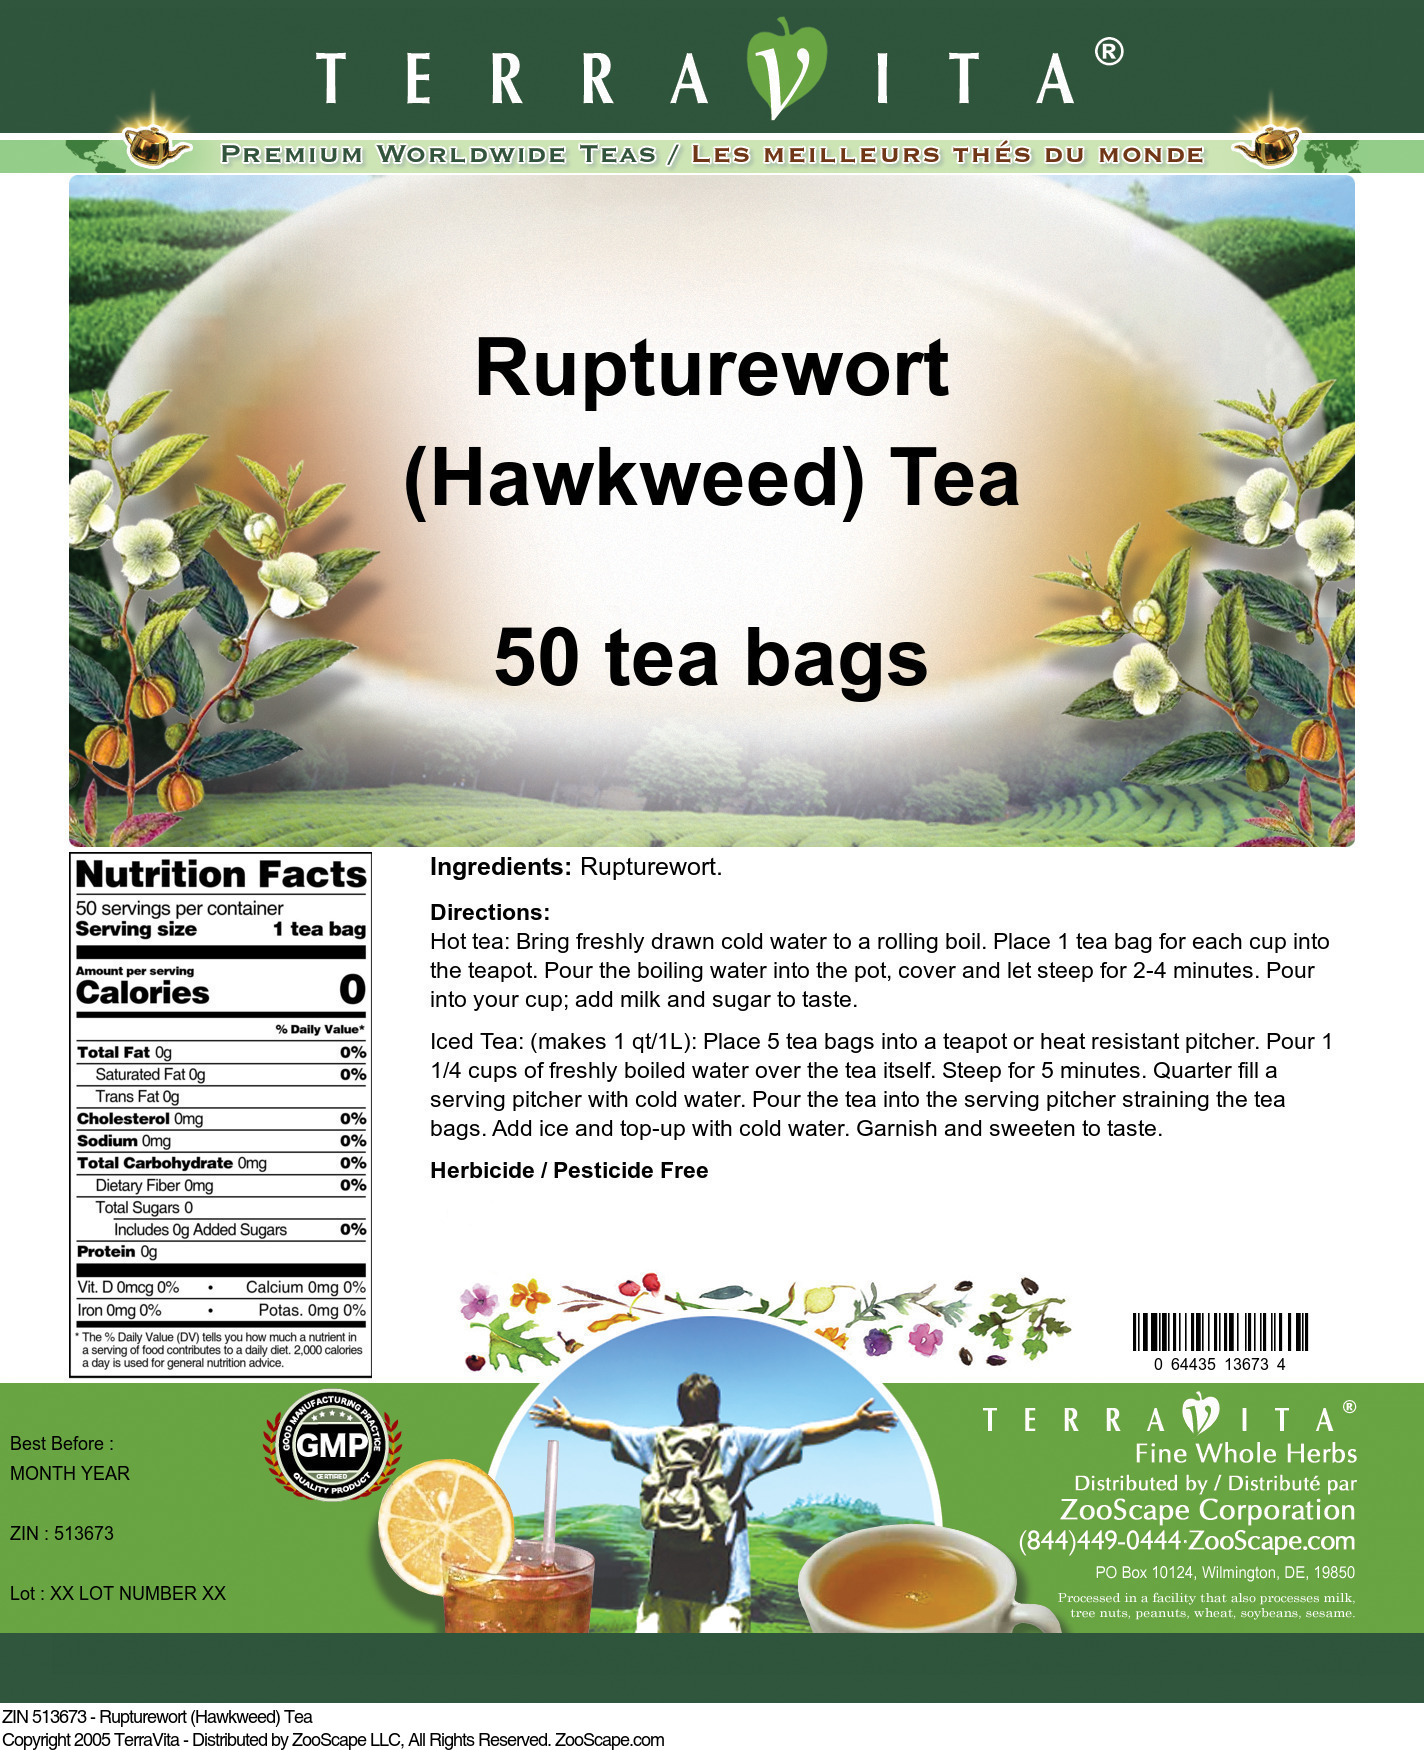 Rupturewort (Hawkweed) Tea - Label